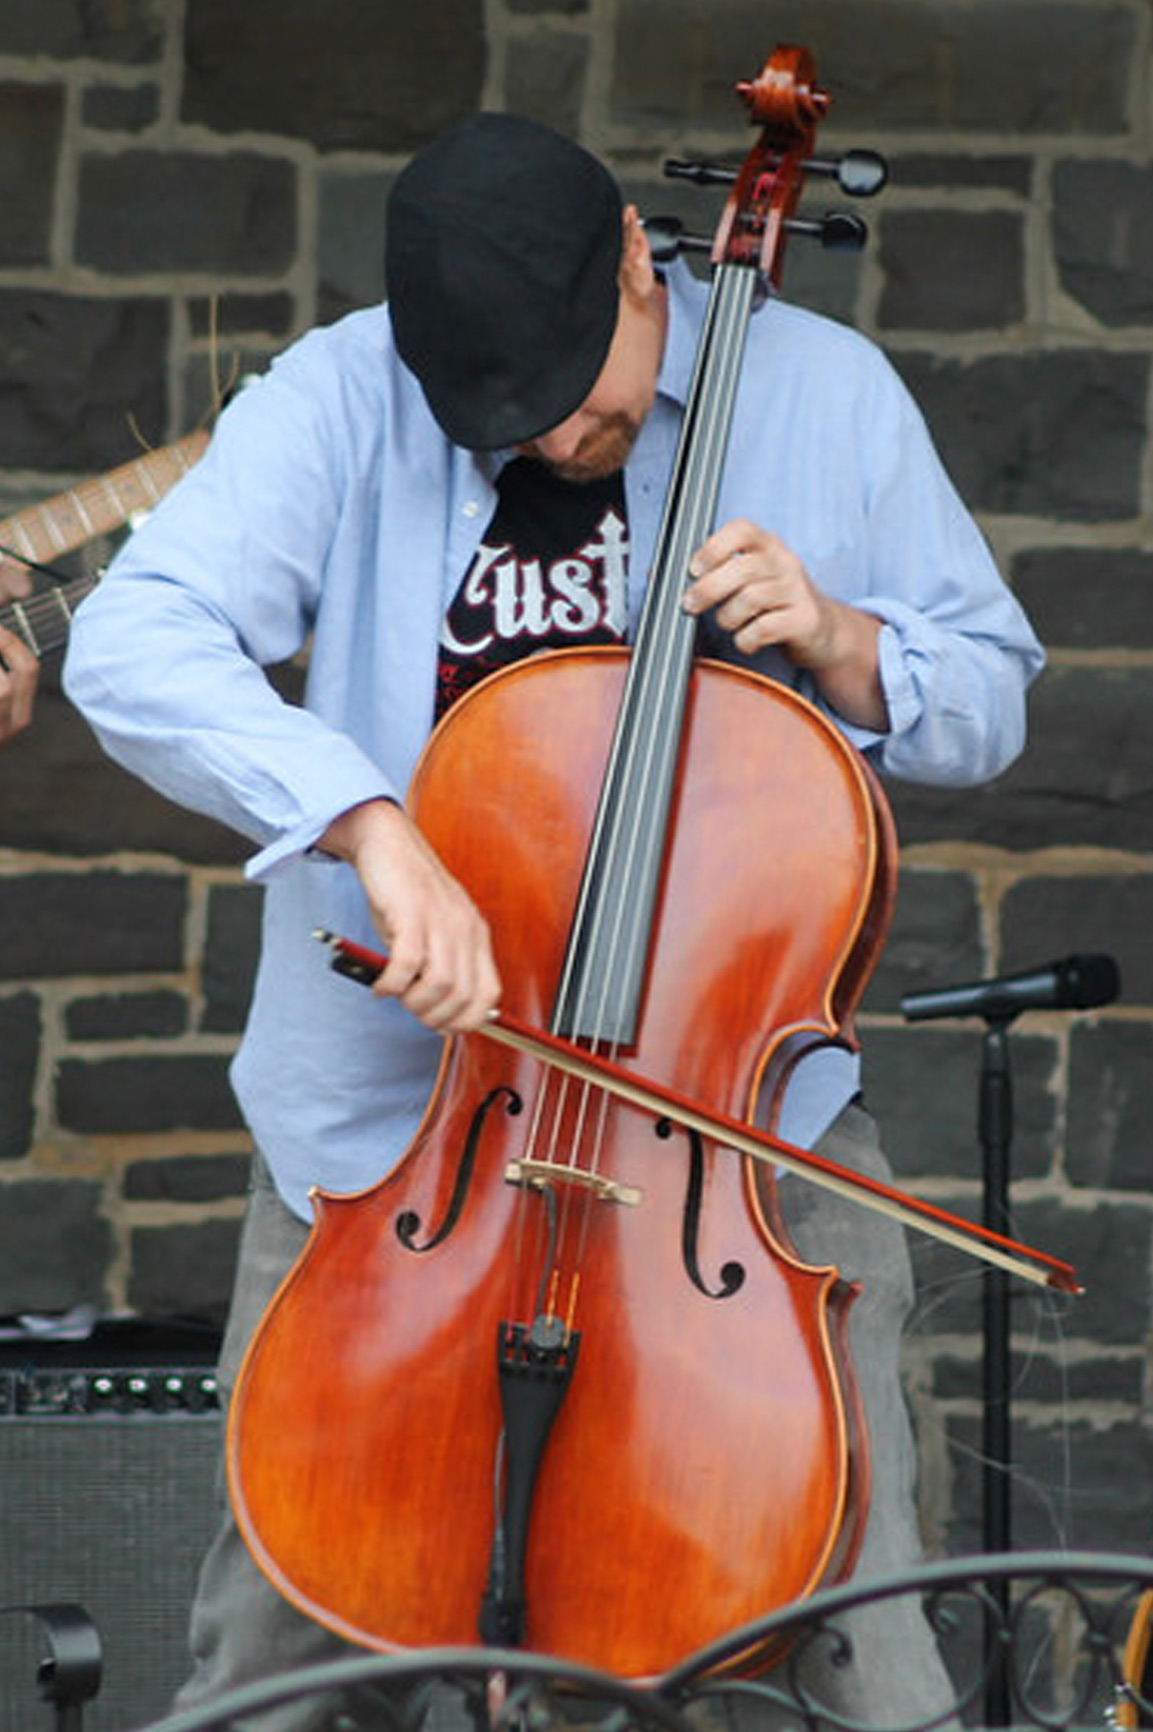 Cellist Dr. Dave Eggar